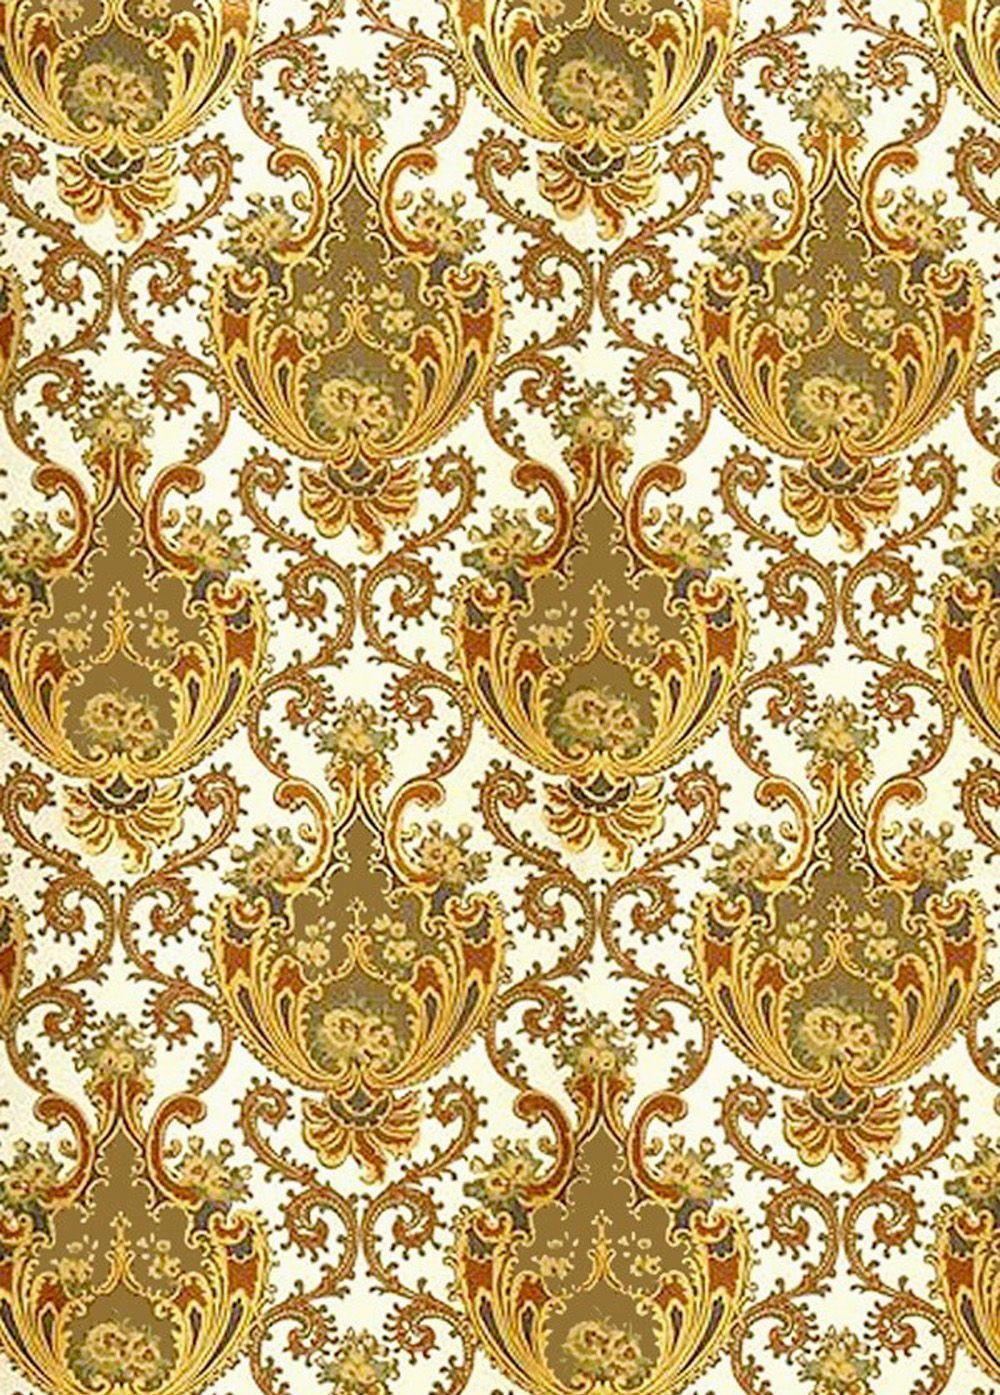 Find full gallery of Elegant Victorian Wallpaper Patterns